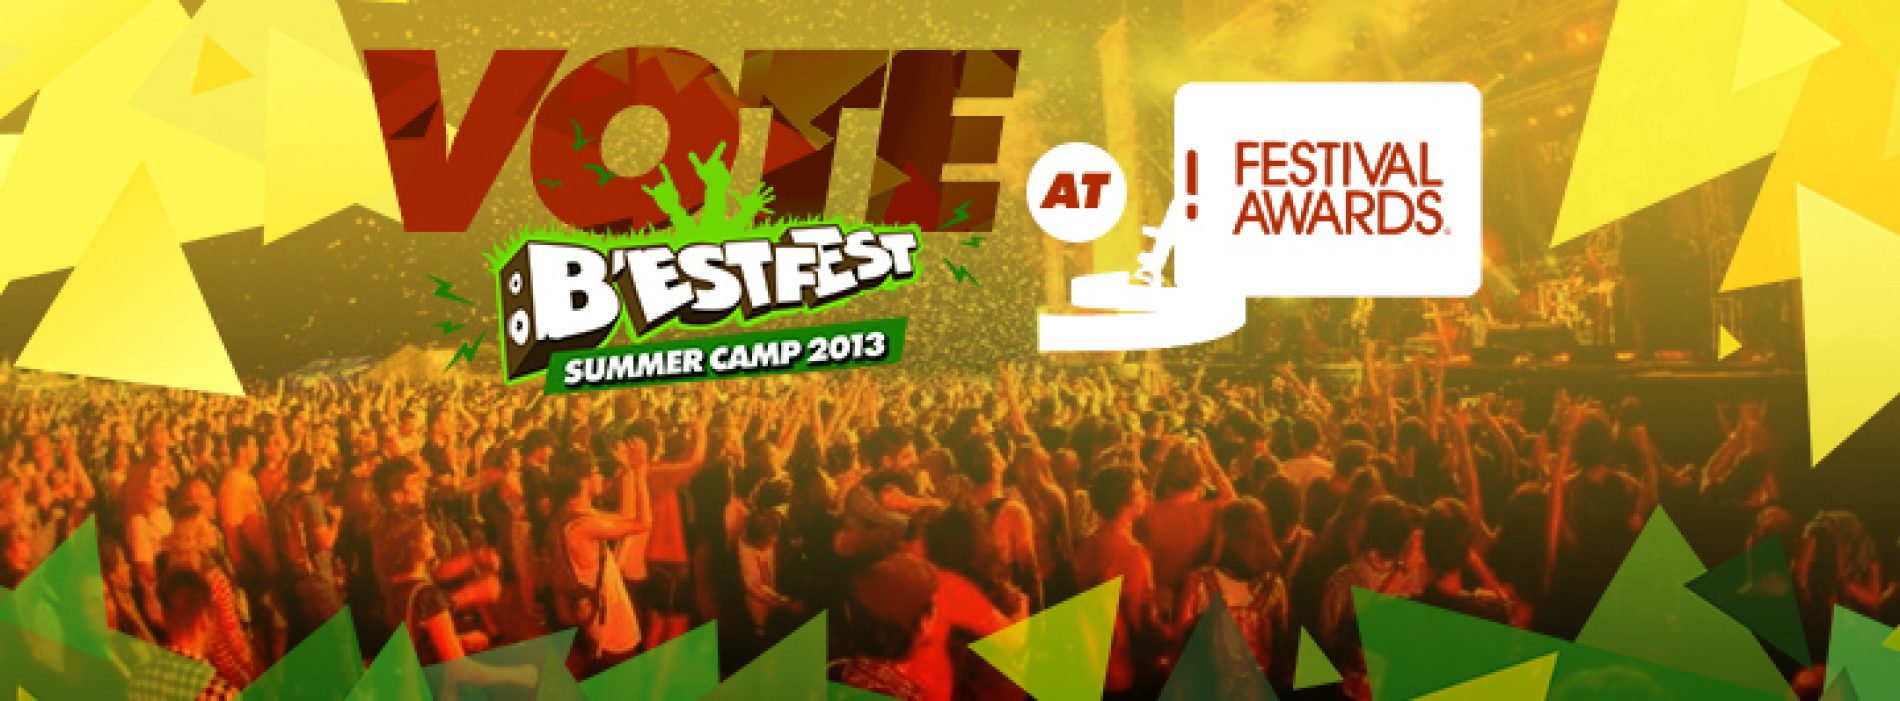 B’ESTFEST Summer Camp – a patra nominalizare la UK Festival Awards!